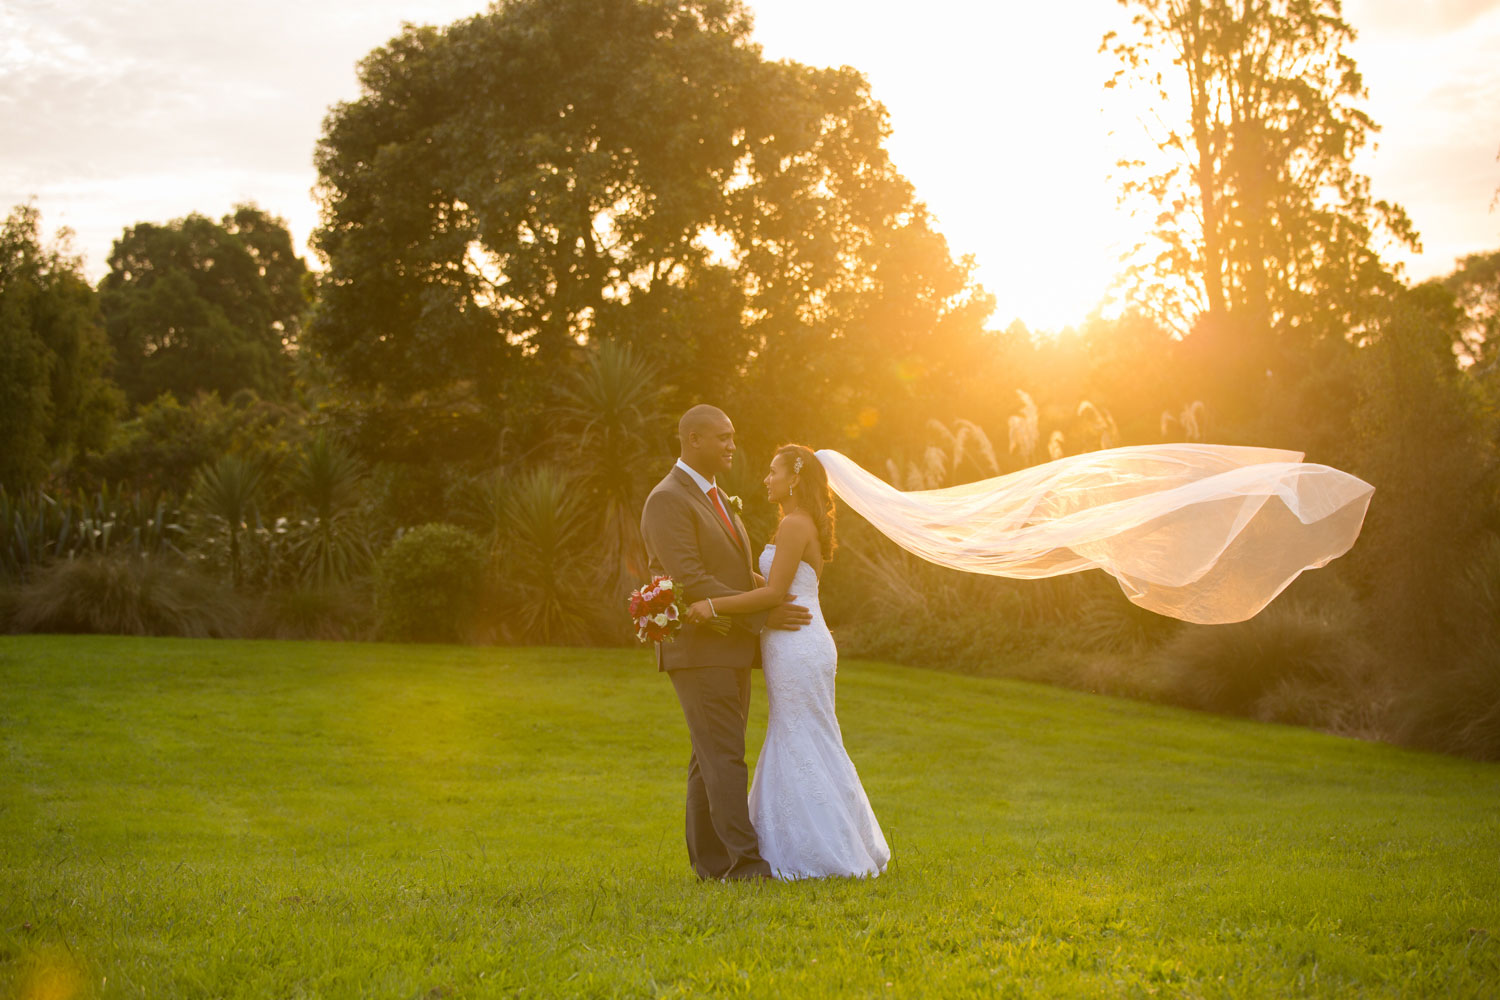 auckland botanic gardens wedding veil toss photo sunset